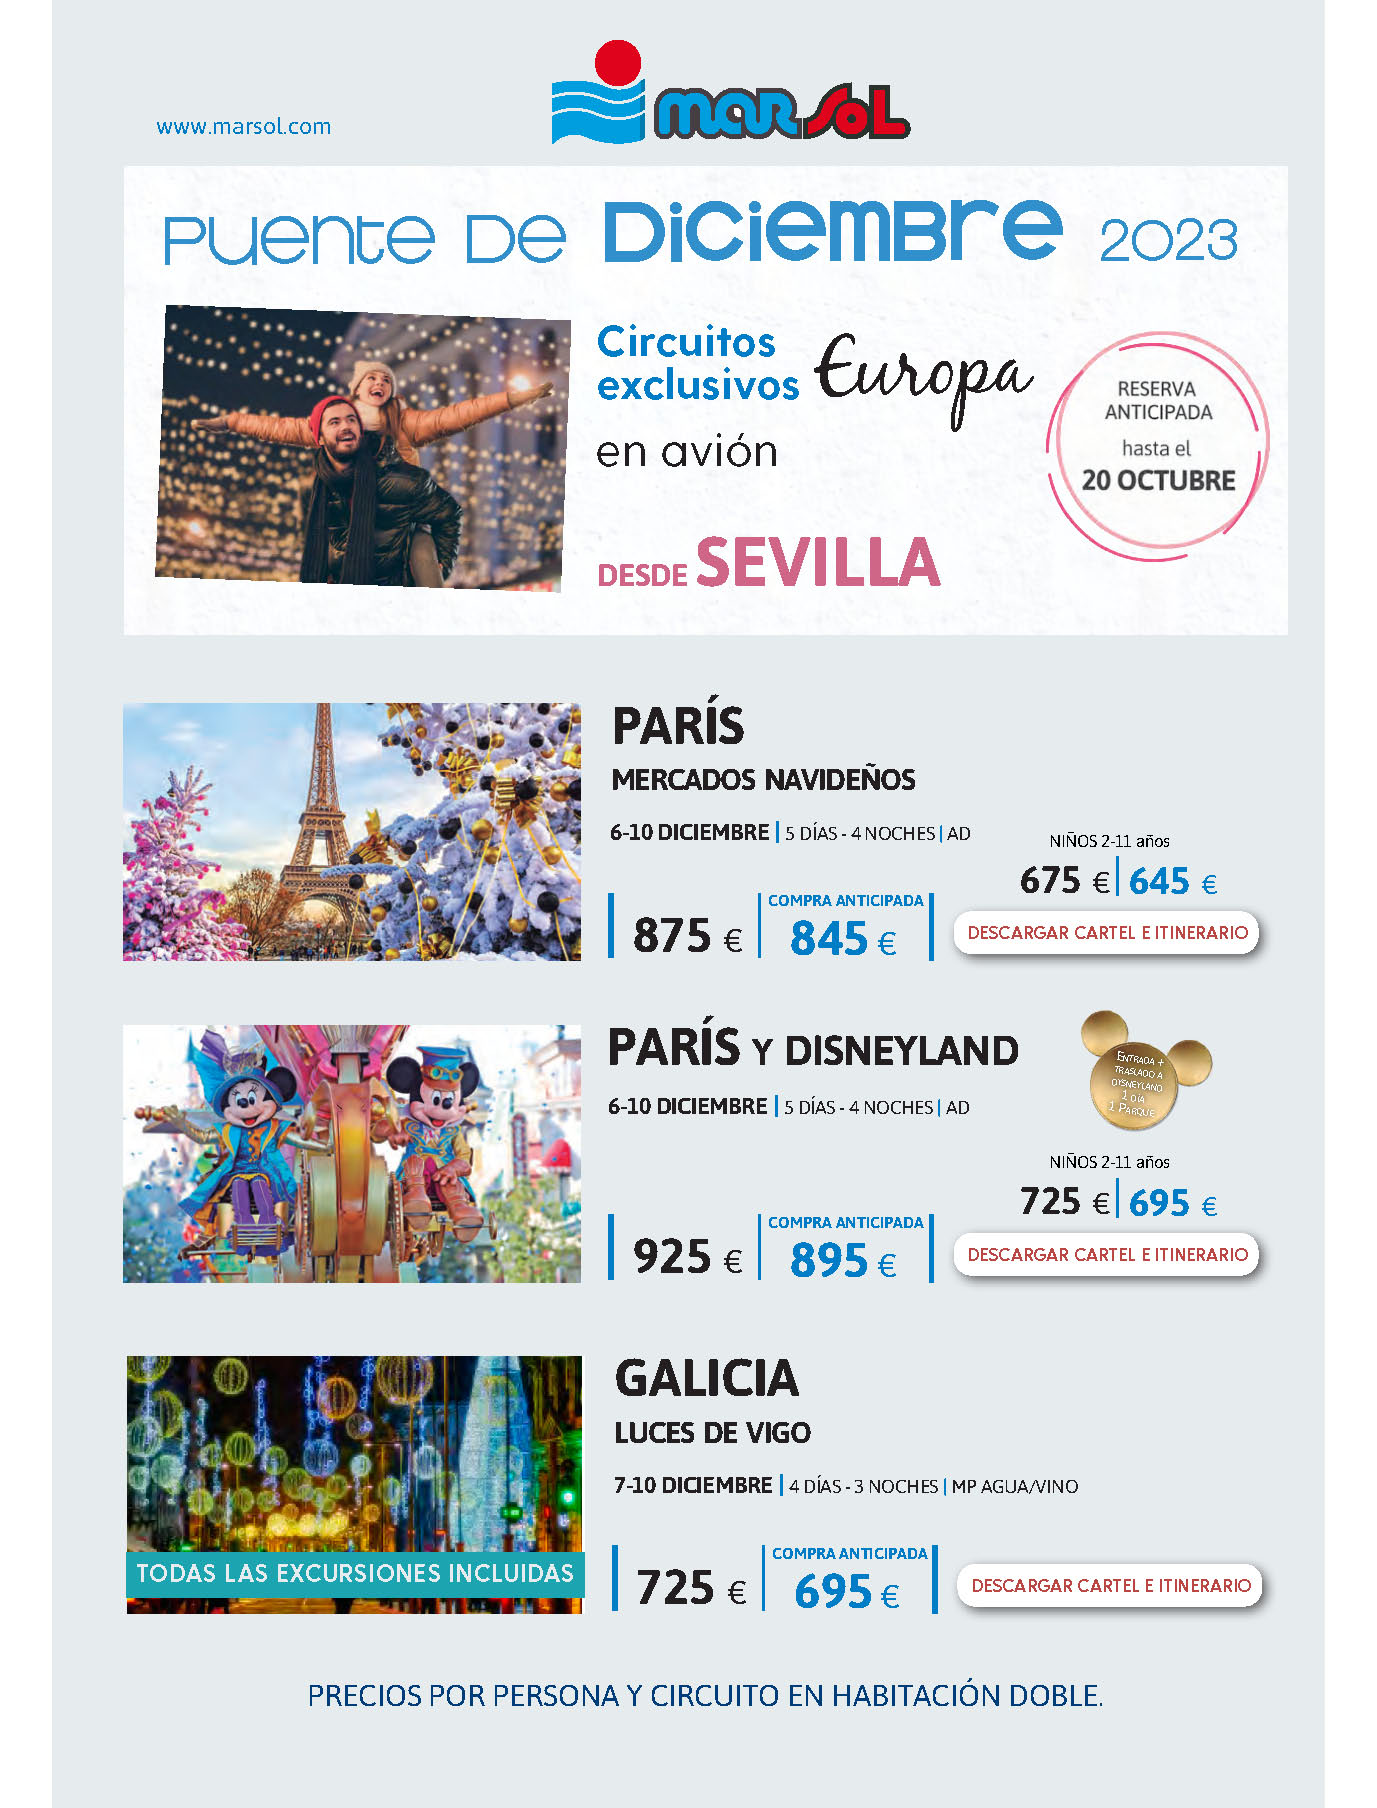 Ofertas Marsol Puente de Diciembre 2023 circuitos 4 o 5 dias Paris Disneyland Galicia salida 6 o 7 diciembre vuelo directo desde Sevilla